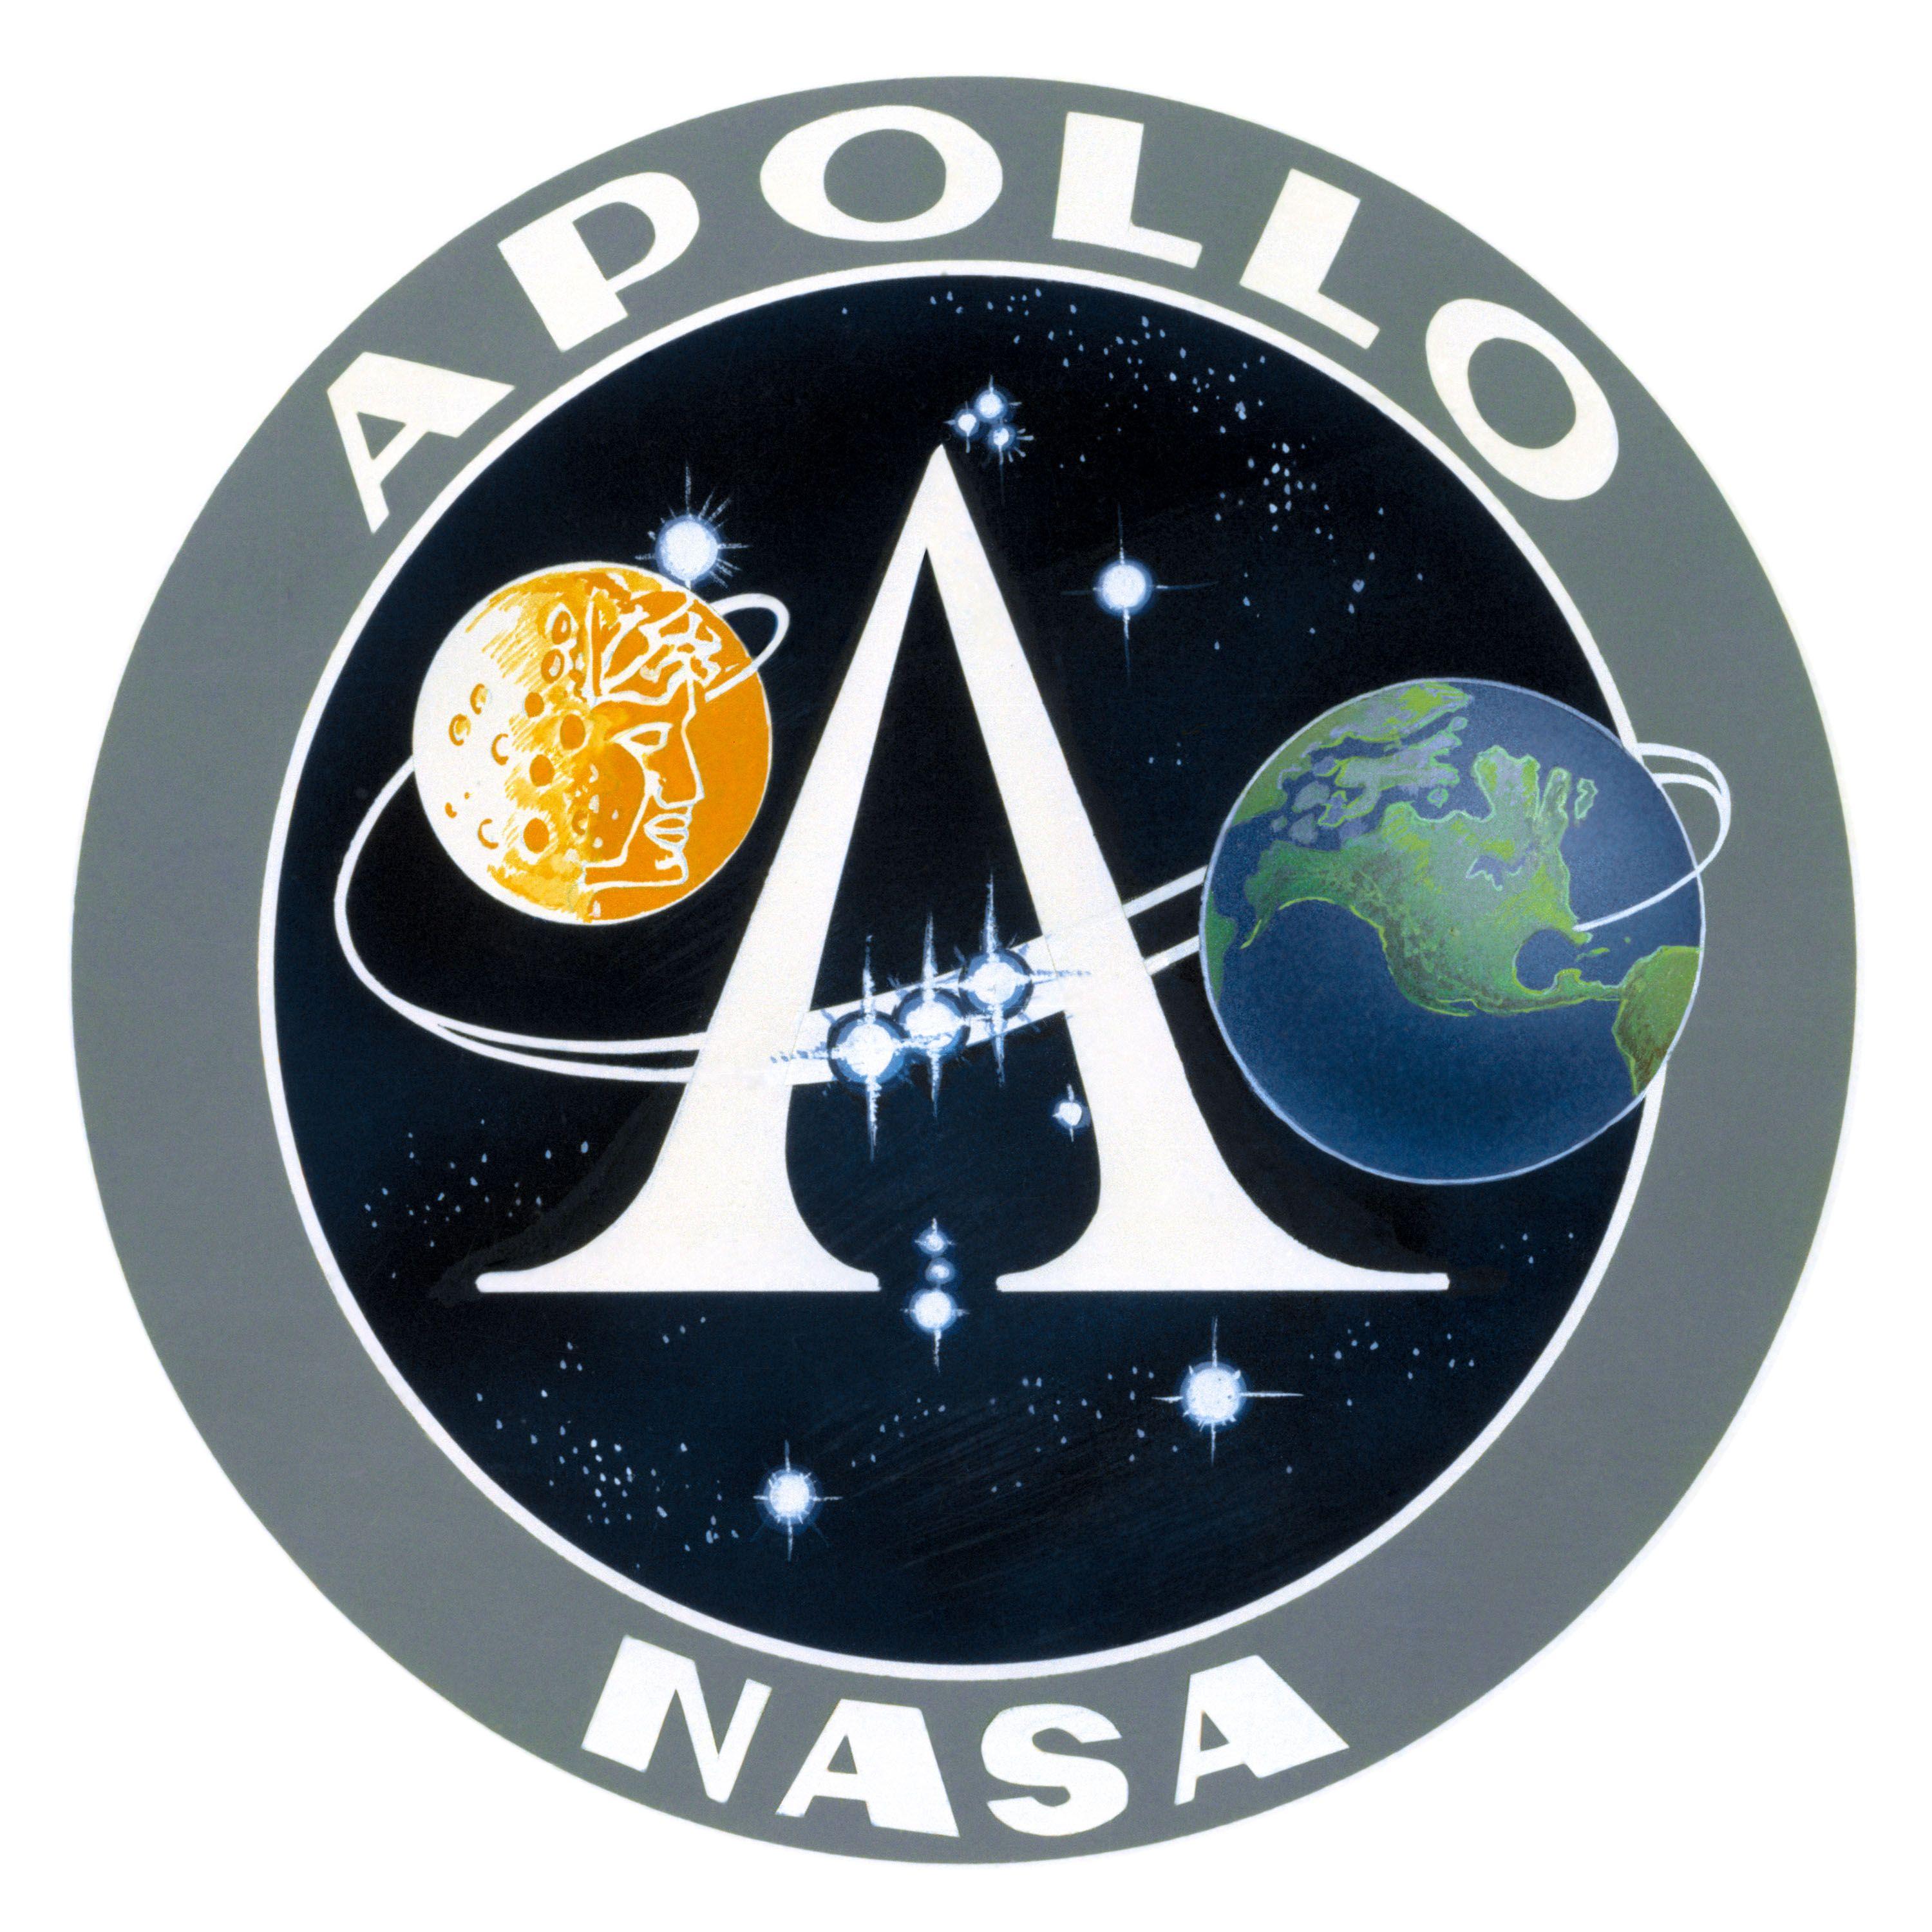 Big Printable NASA Logo - The Apollo Missions | NASA